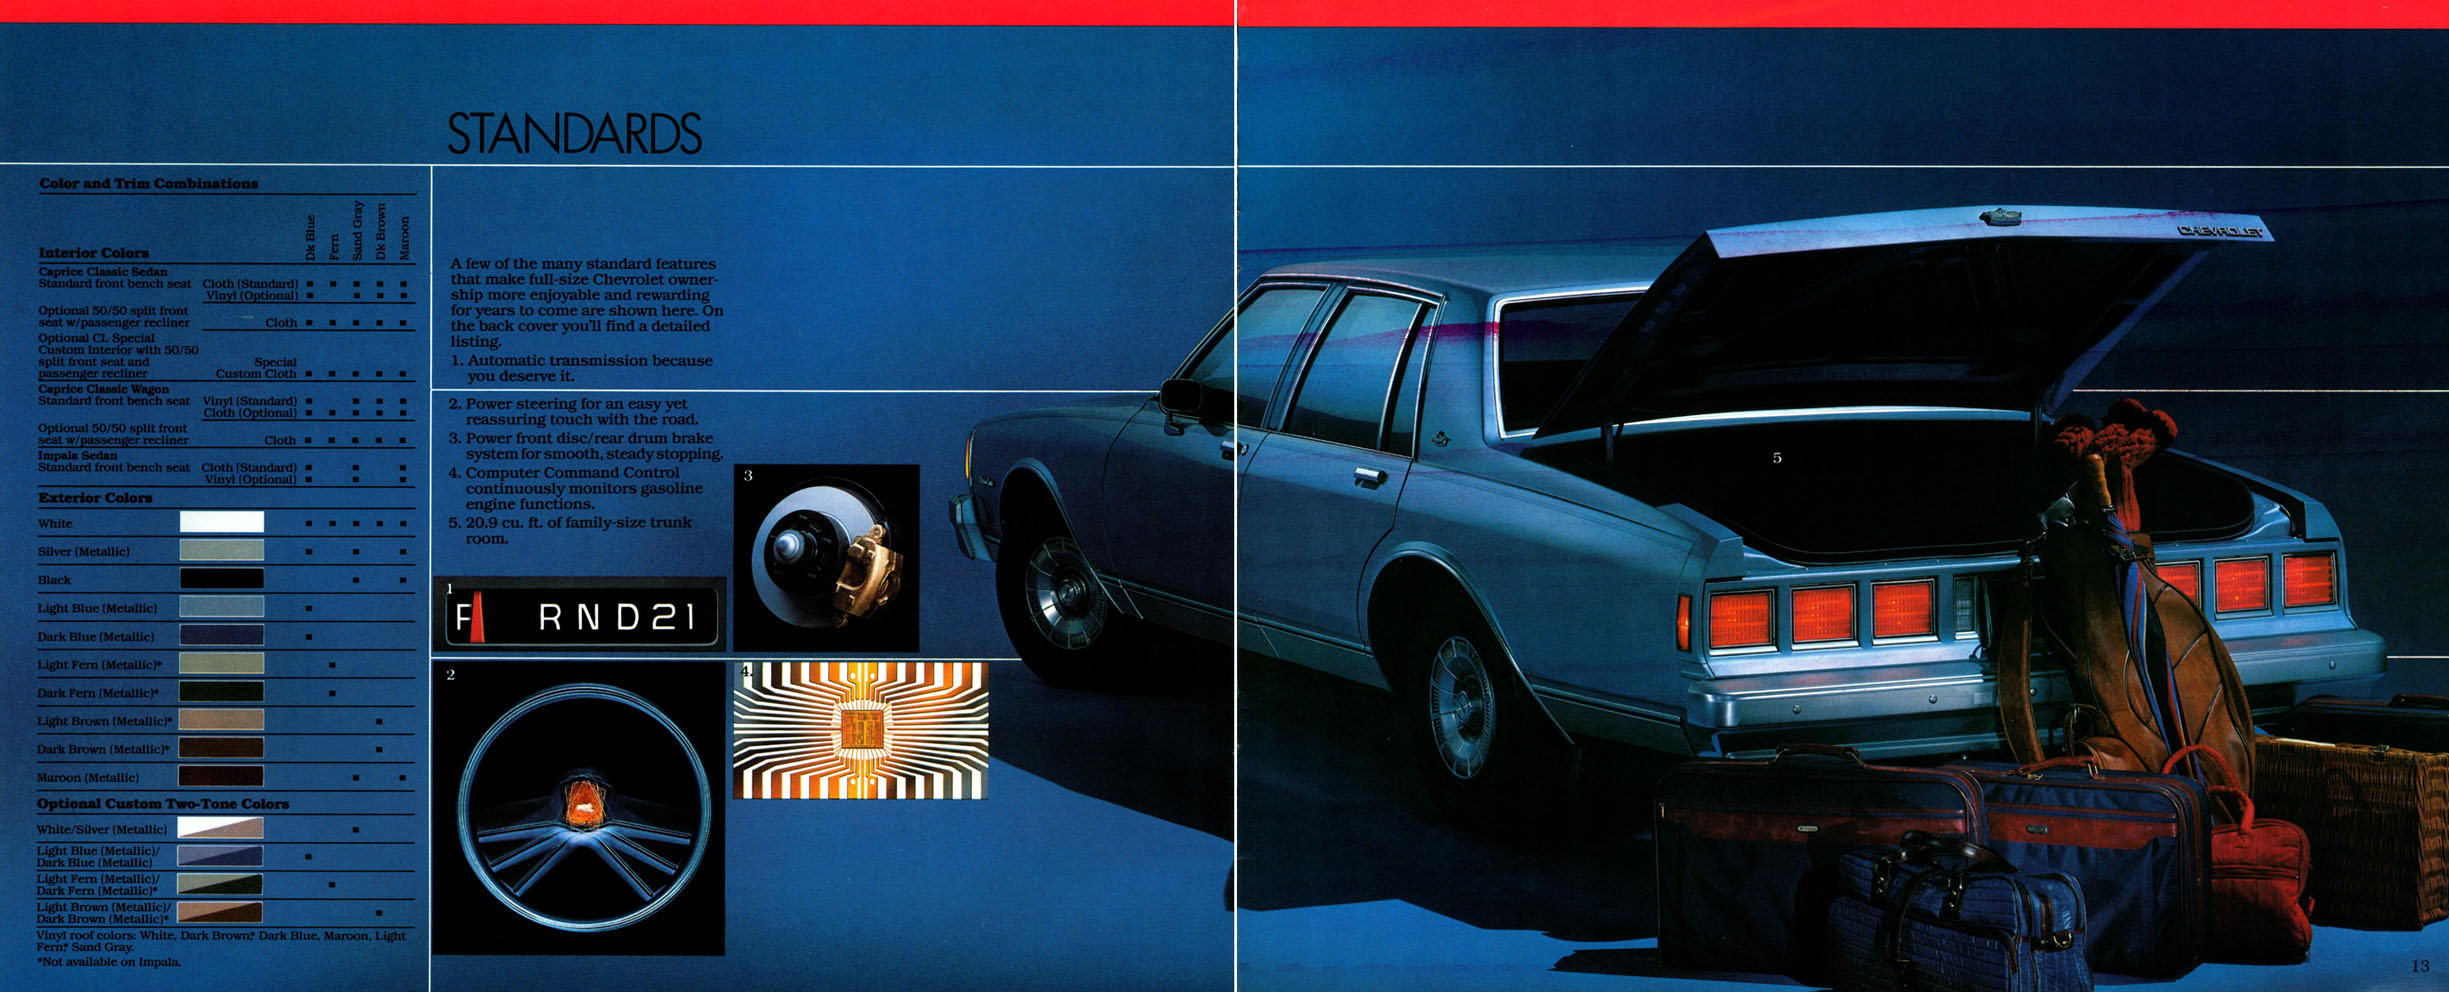 1983_Chevrolet_Caprice_Classic__Impala-12-13